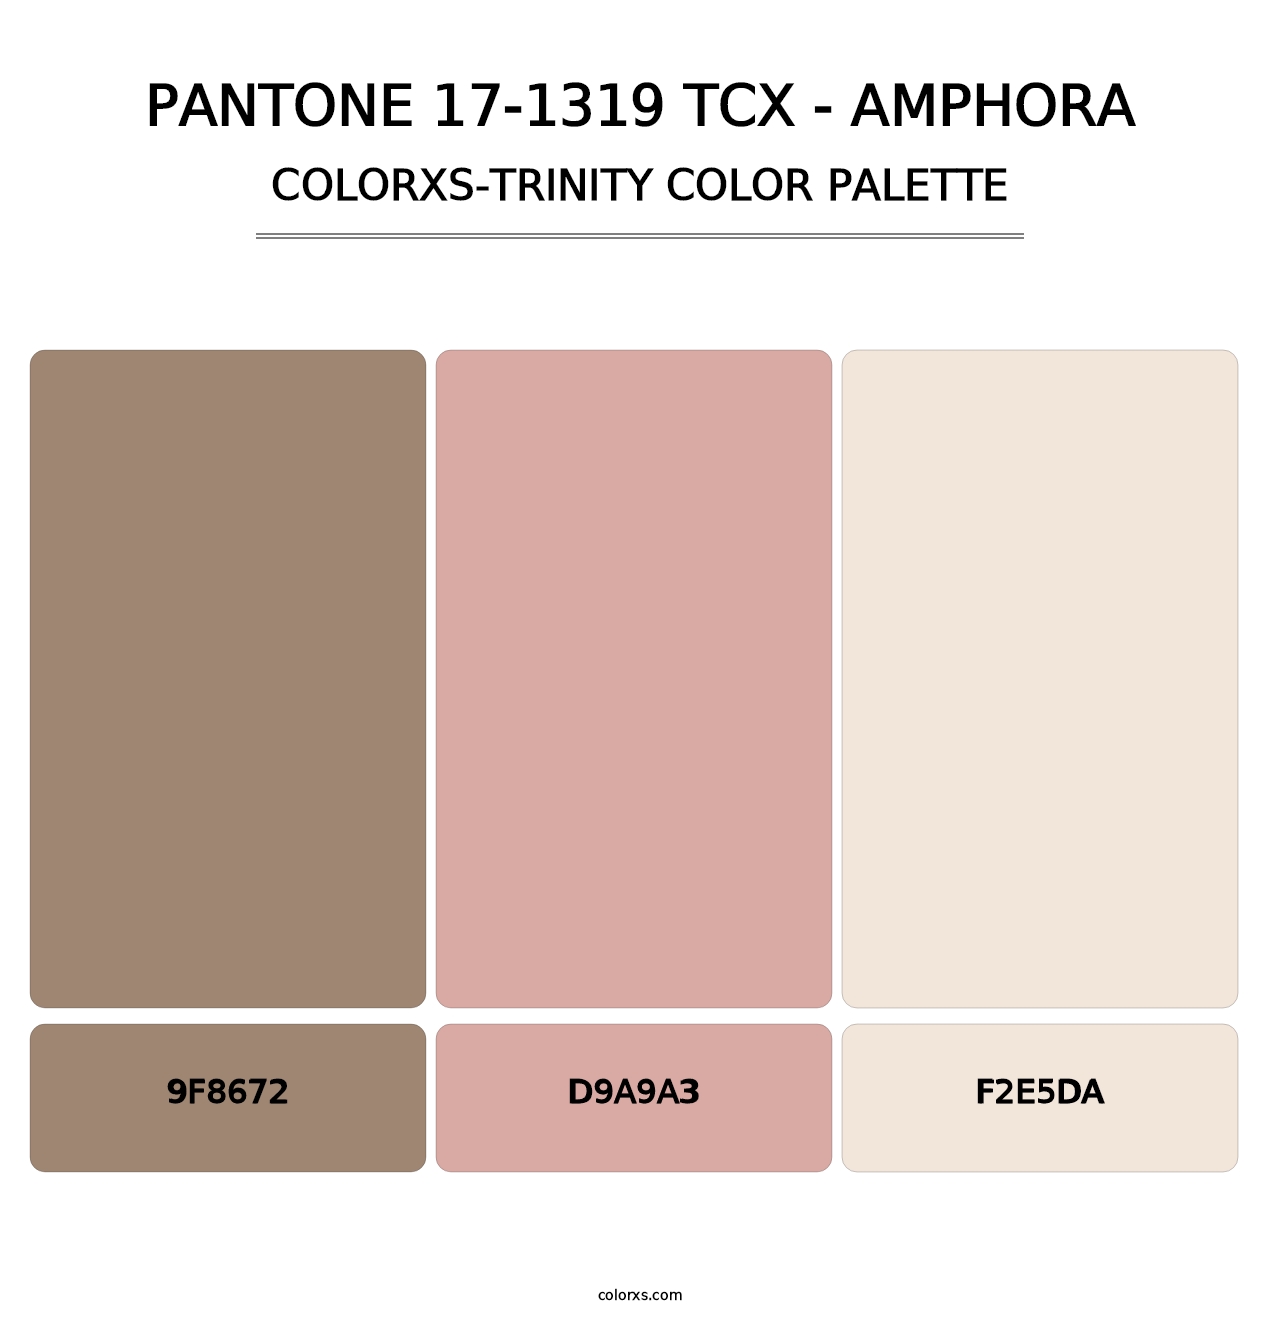 PANTONE 17-1319 TCX - Amphora - Colorxs Trinity Palette